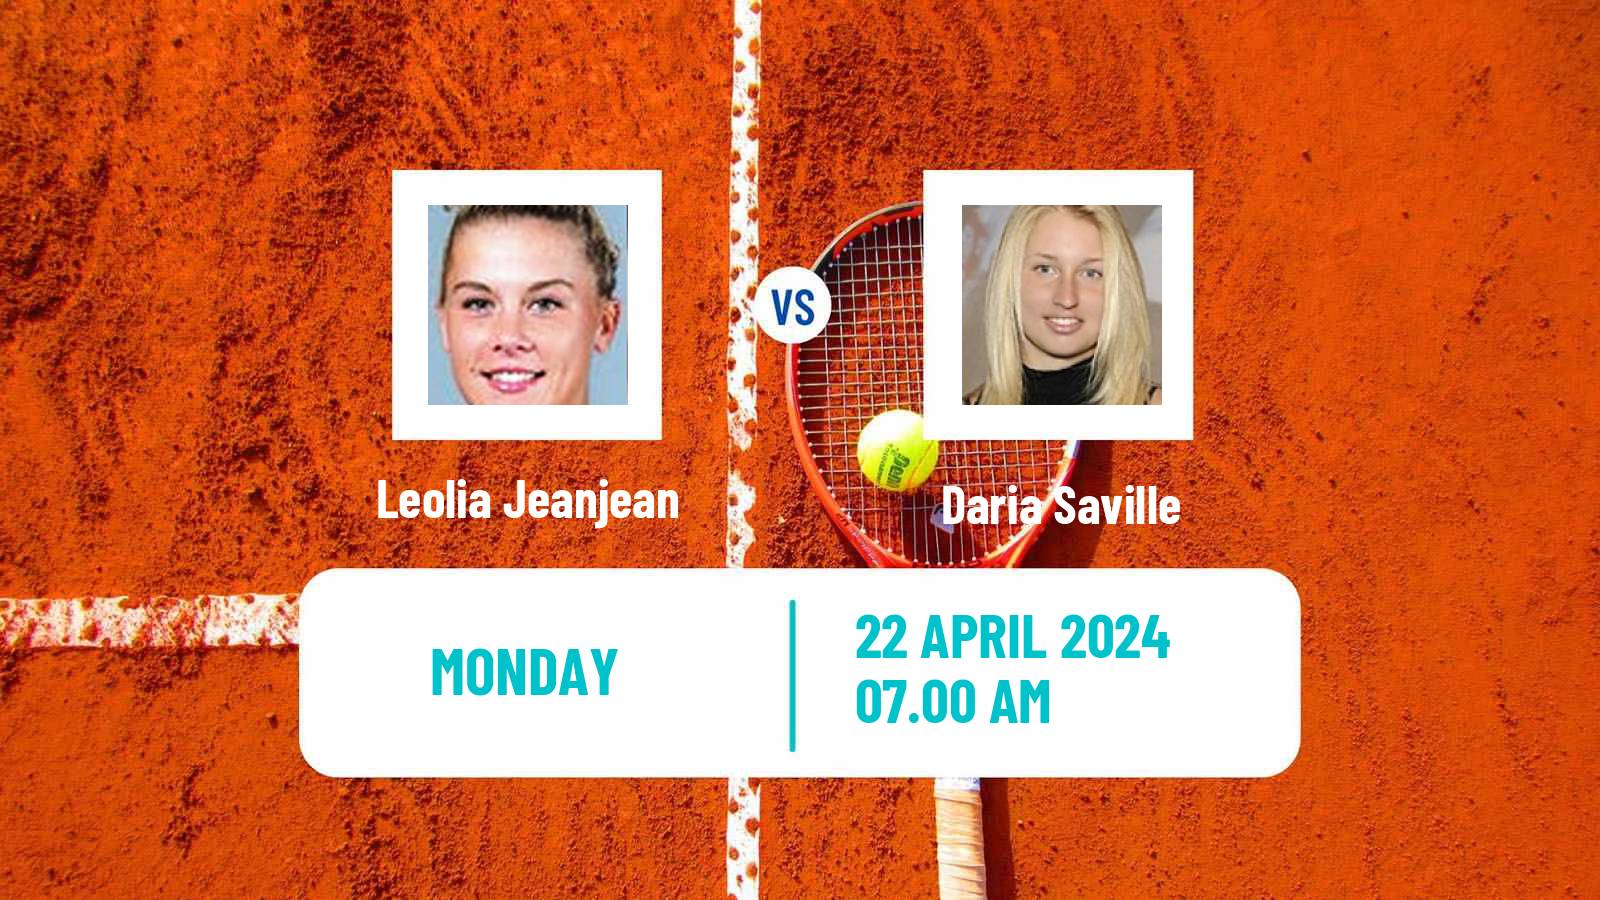 Tennis WTA Madrid Leolia Jeanjean - Daria Saville